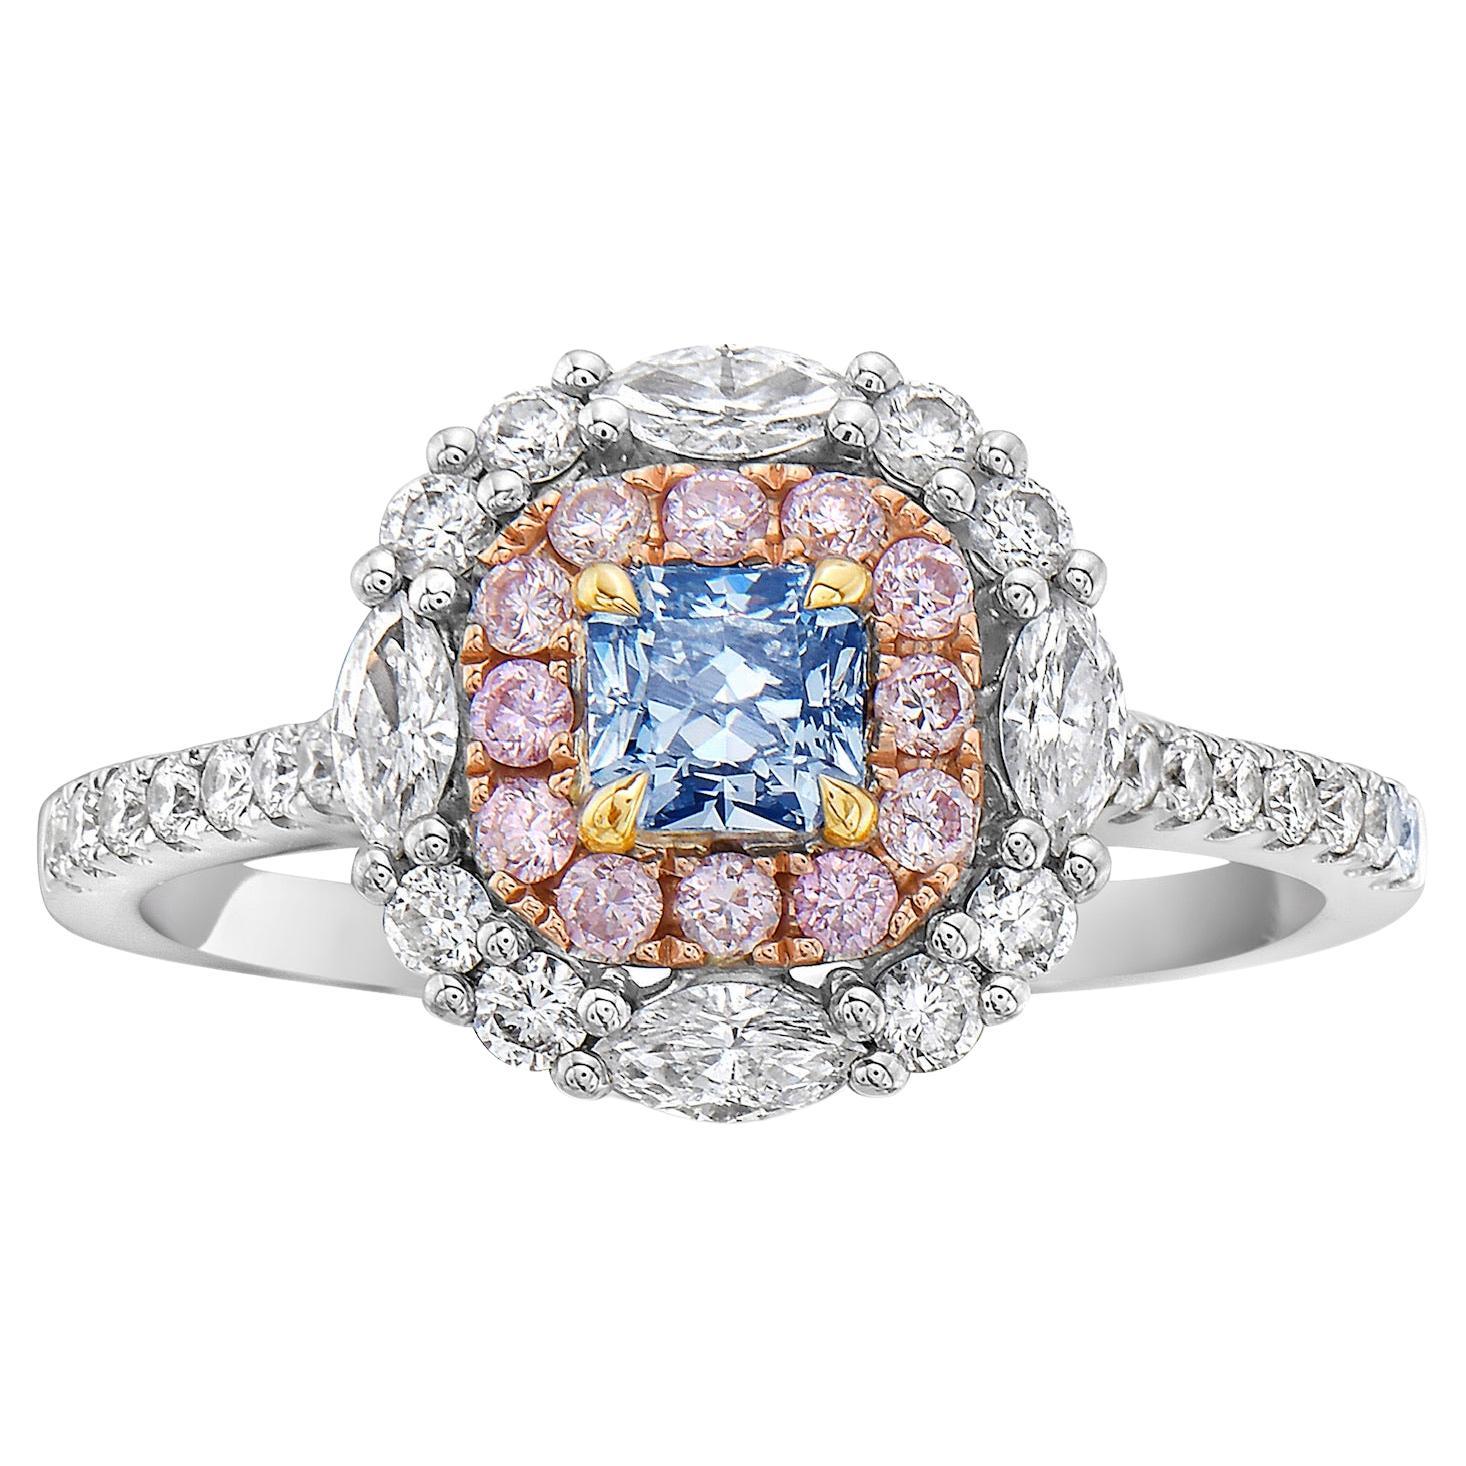 Fancy Blue Radiant Diamond Ring